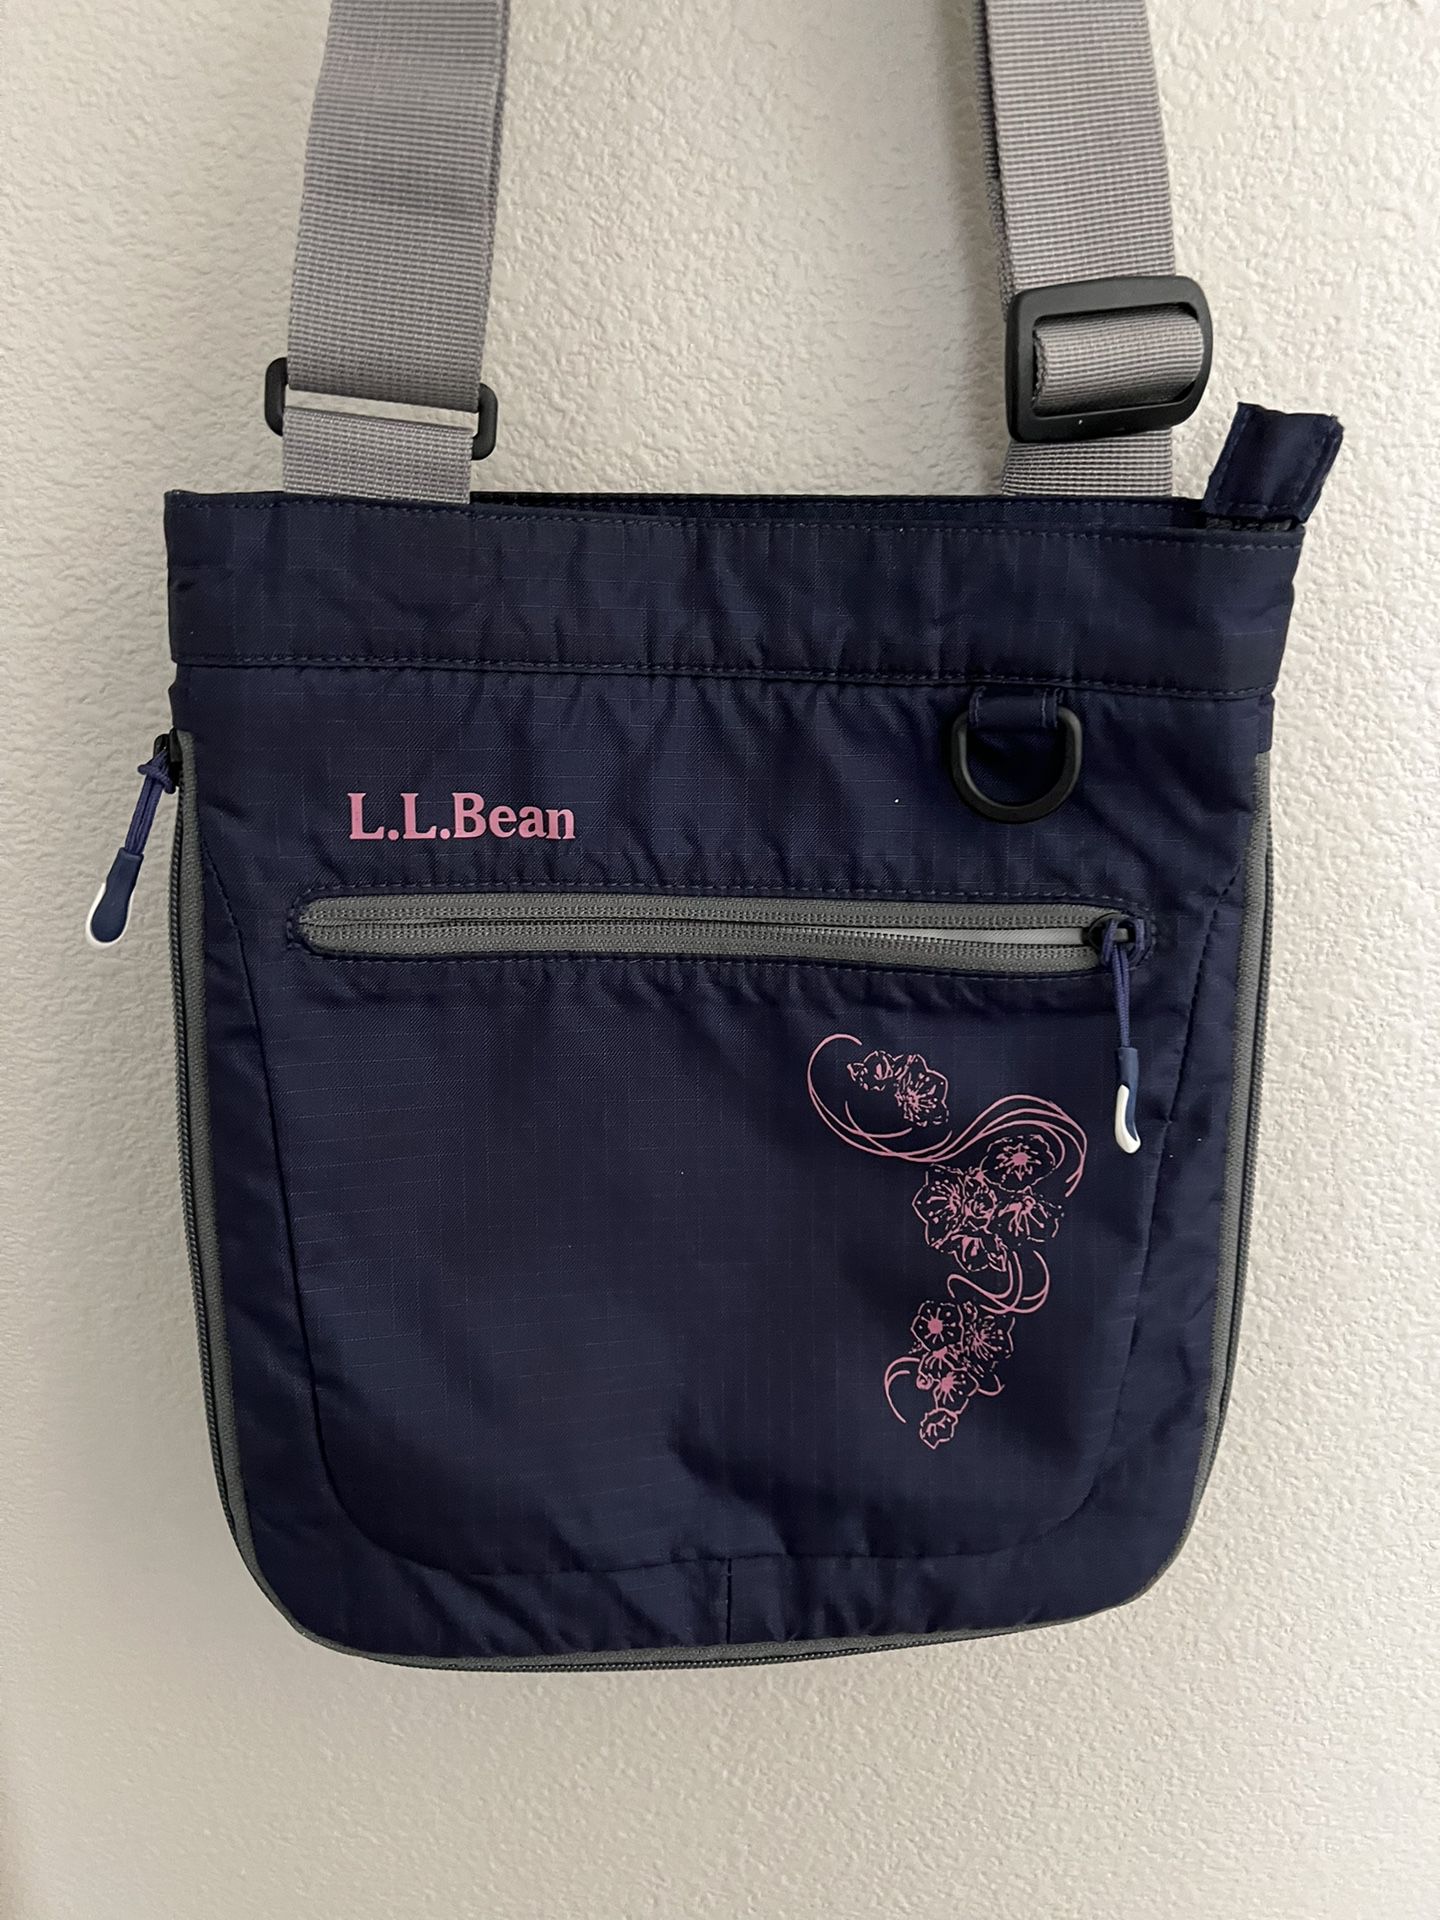 L.L. Bean Expandable Crossbody Bag LIKE NEW!!!